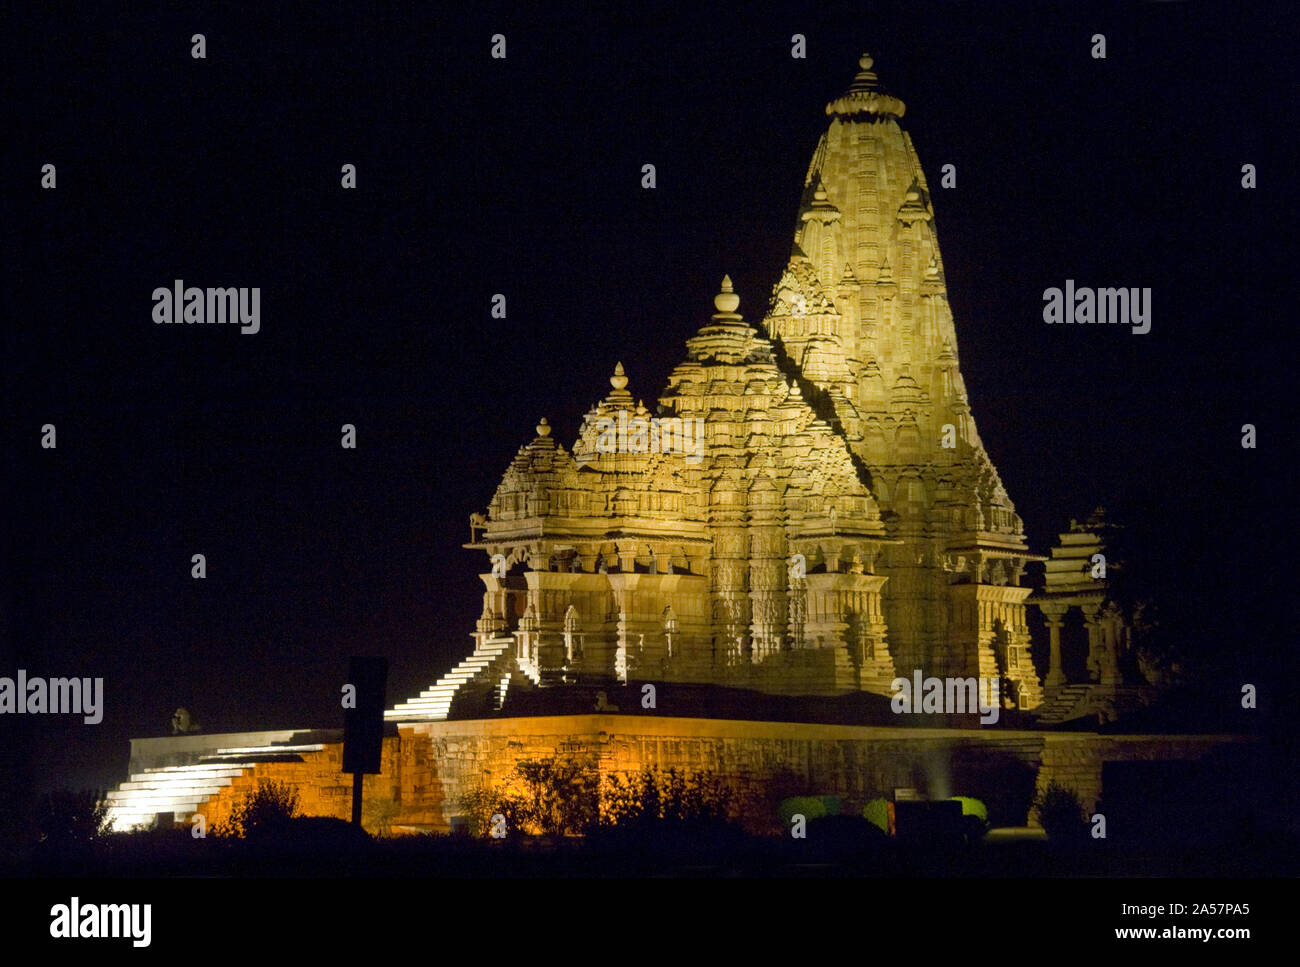 Temple in a town, Khajuraho, Chhatarpur District, Madhya Pradesh, India Stock Photo